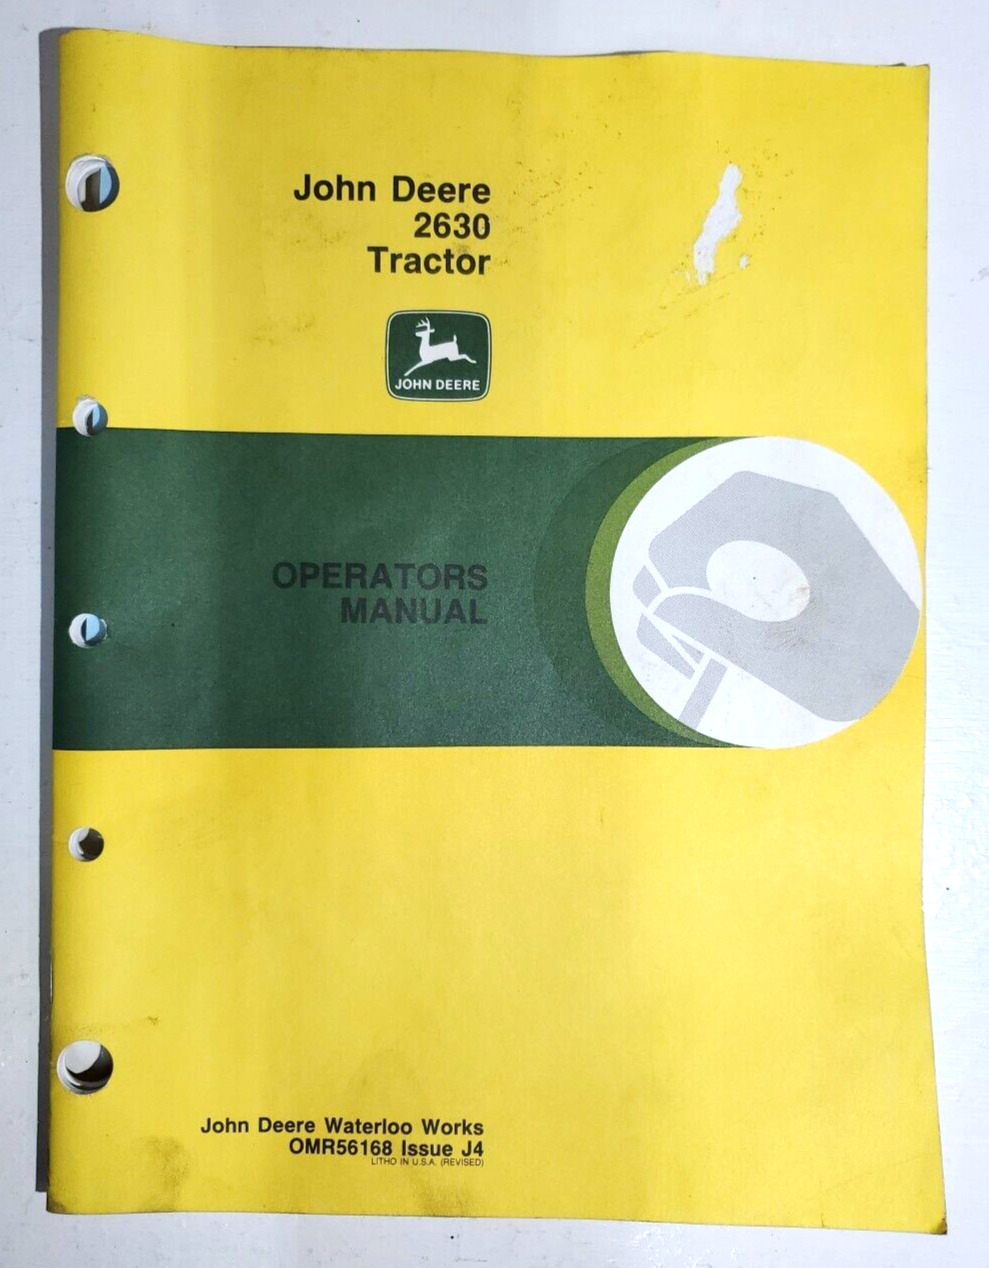 Vintage John Deere 2630 Tractor Operator\'s Manual OMR56268 Issue J4